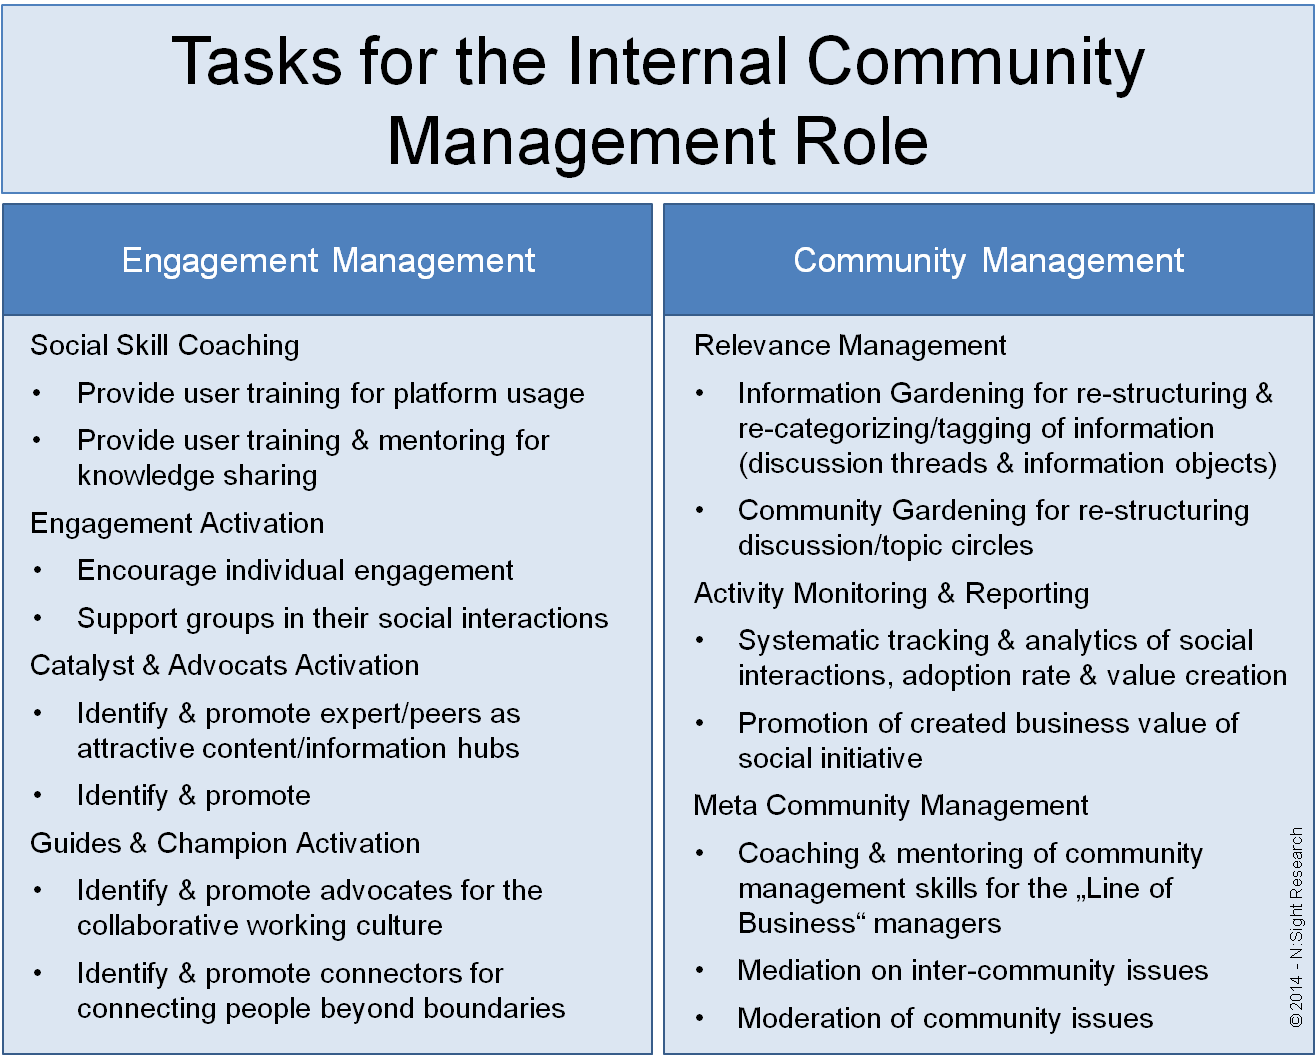 Key tasks for the internal community management lead